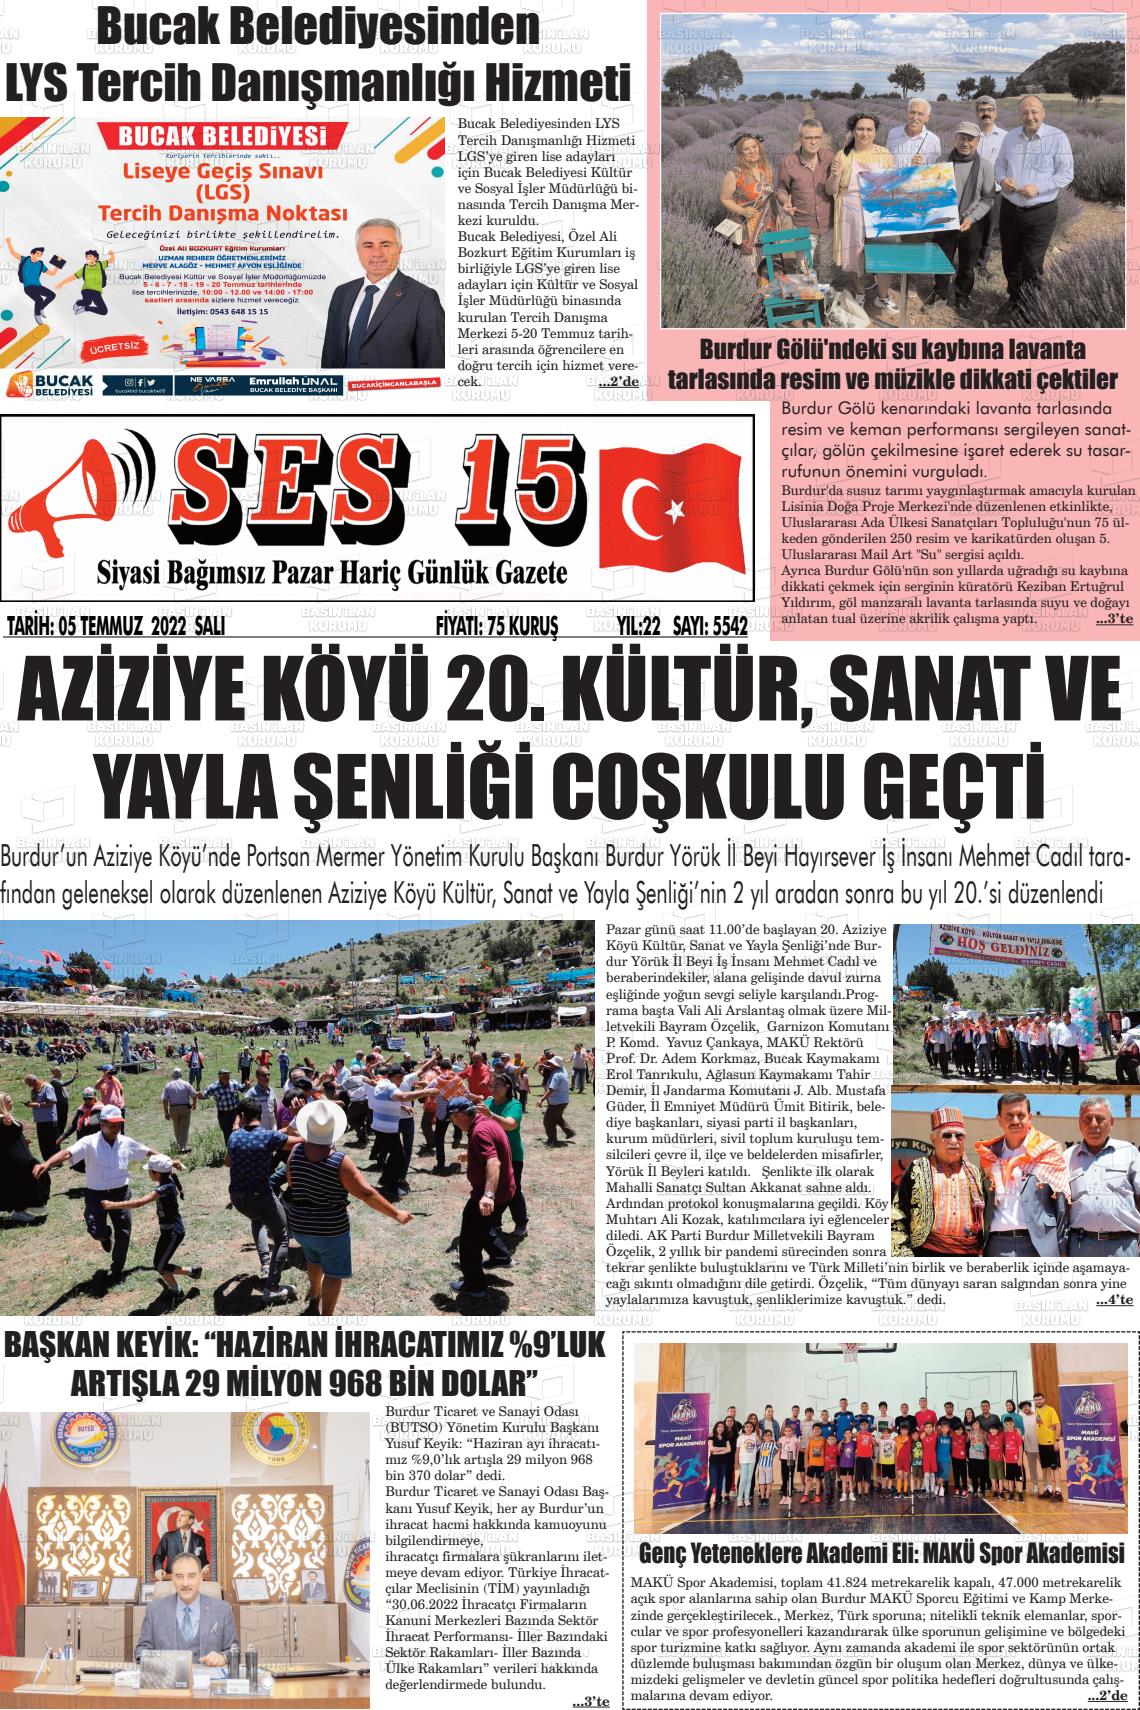 05 Temmuz 2022 Ses 15 Gazete Manşeti